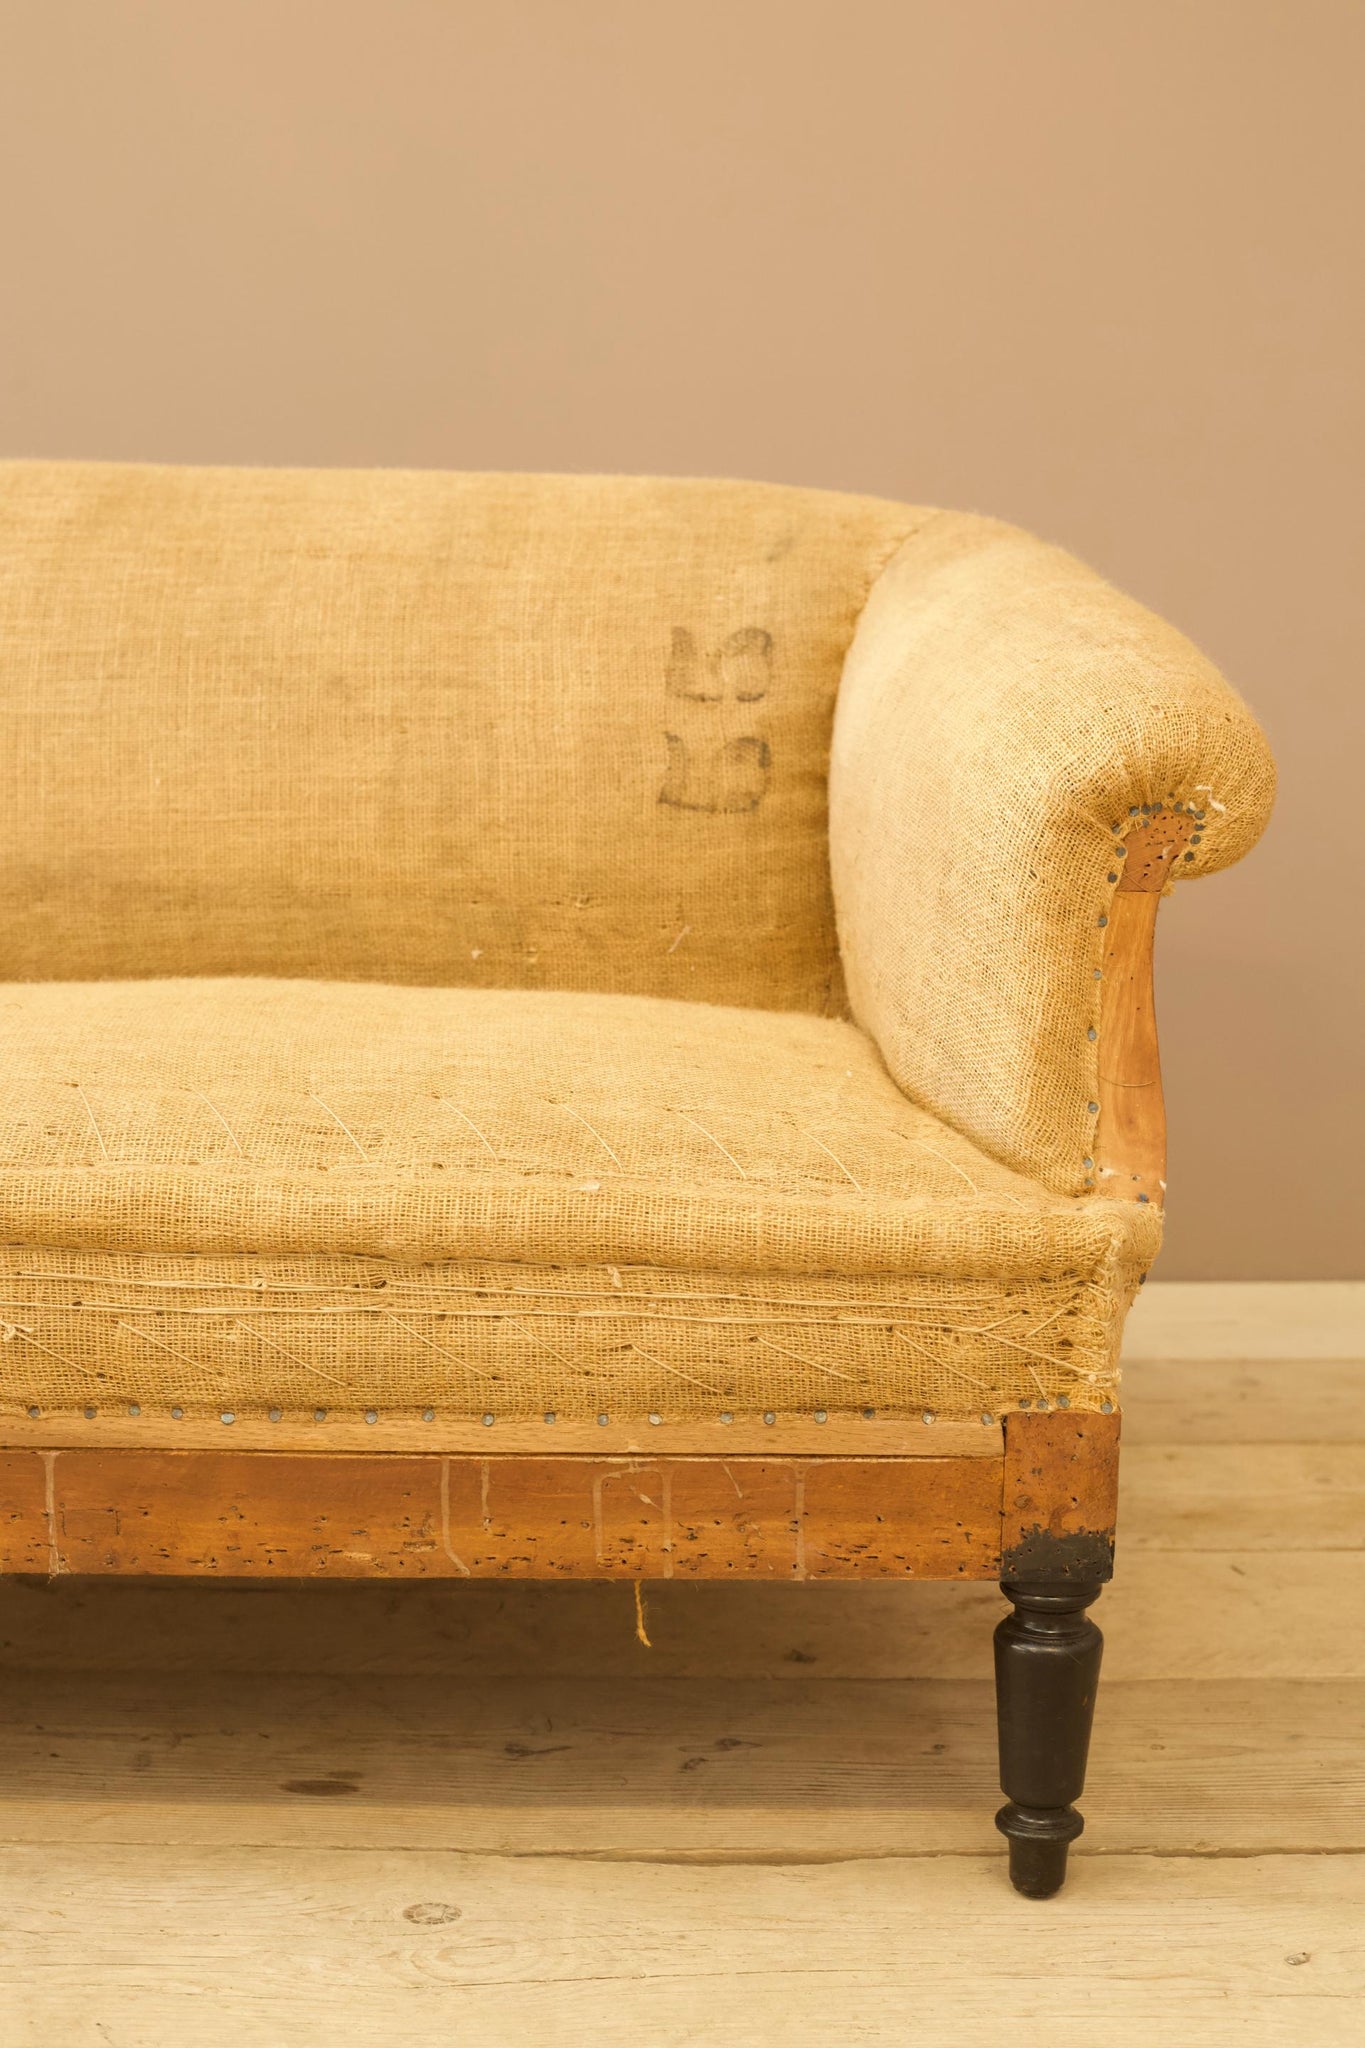 Napoleon III square sided sofa